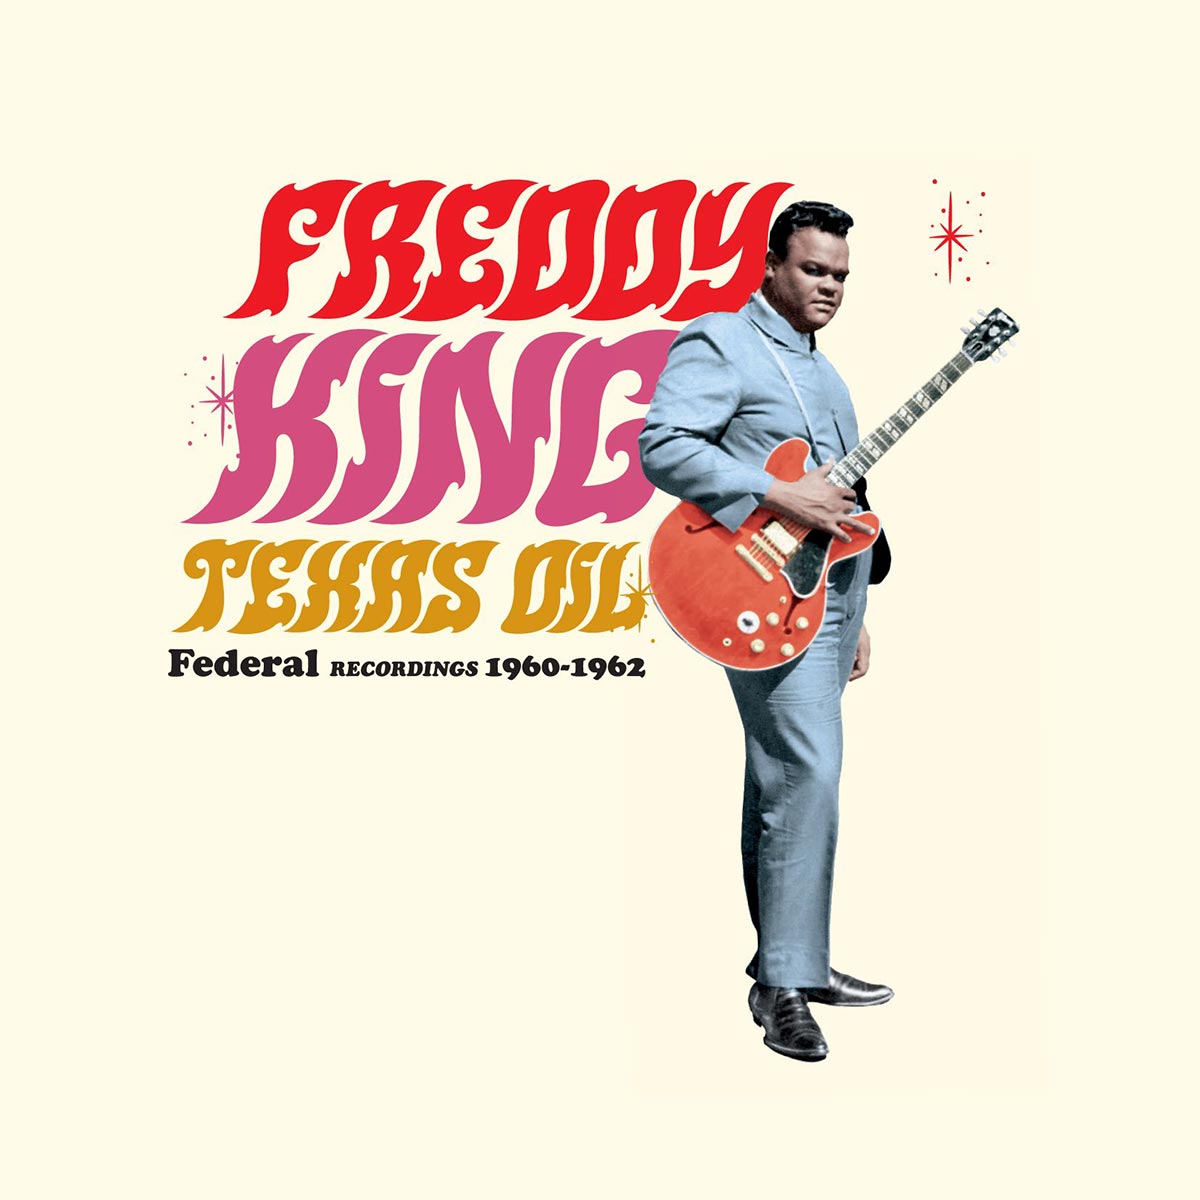 Texas Oil - Federal Recordings 1960-1962